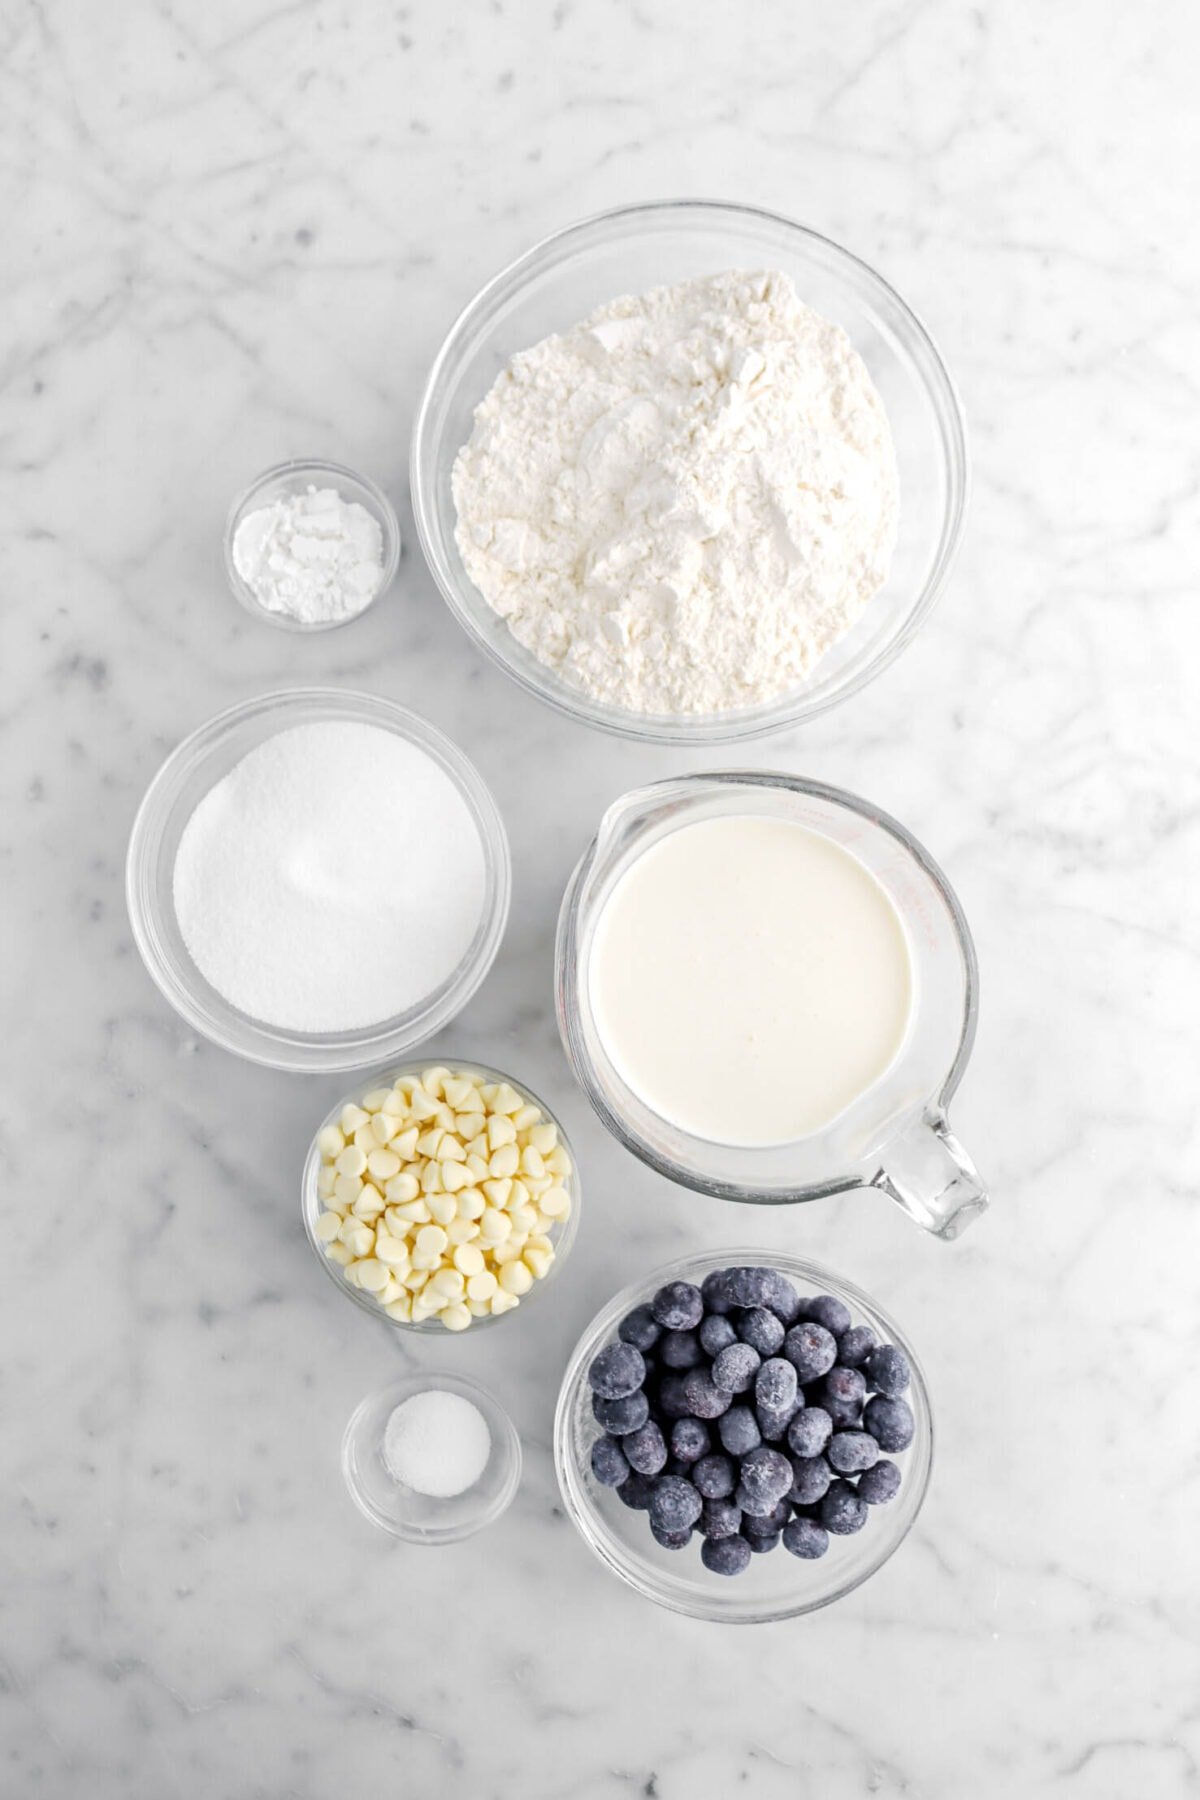 flour, baking poder, sugar, cream, white chocolate, blueberries, and salt on marble surface.